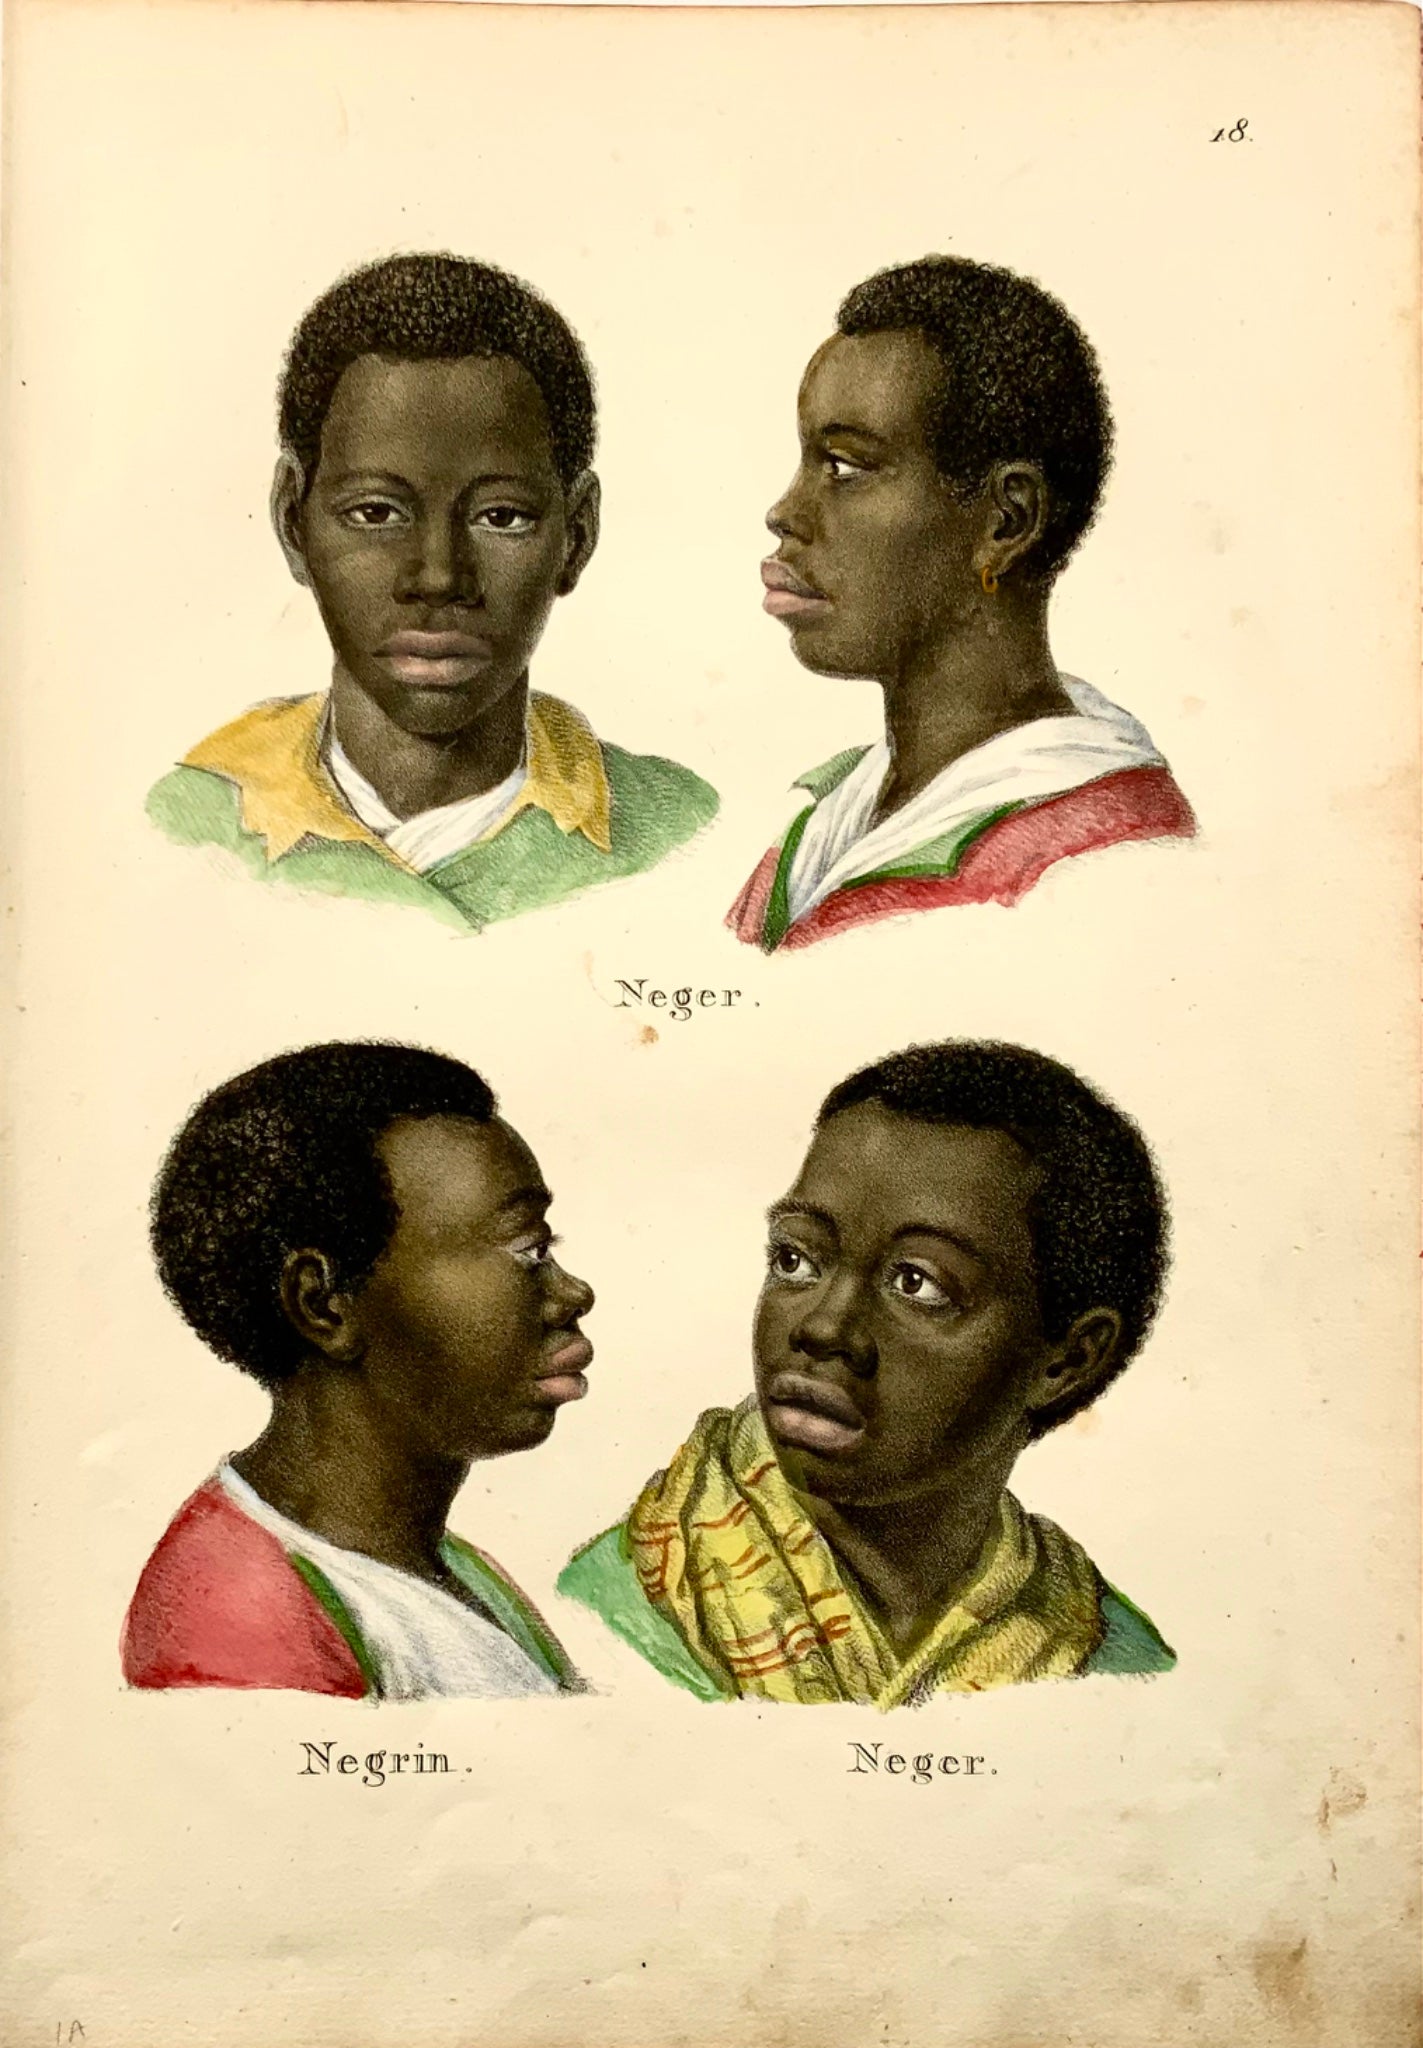 1824 Nativi africani, schiavi, KJ Brodtmann, col. a mano, litografia, etnologia